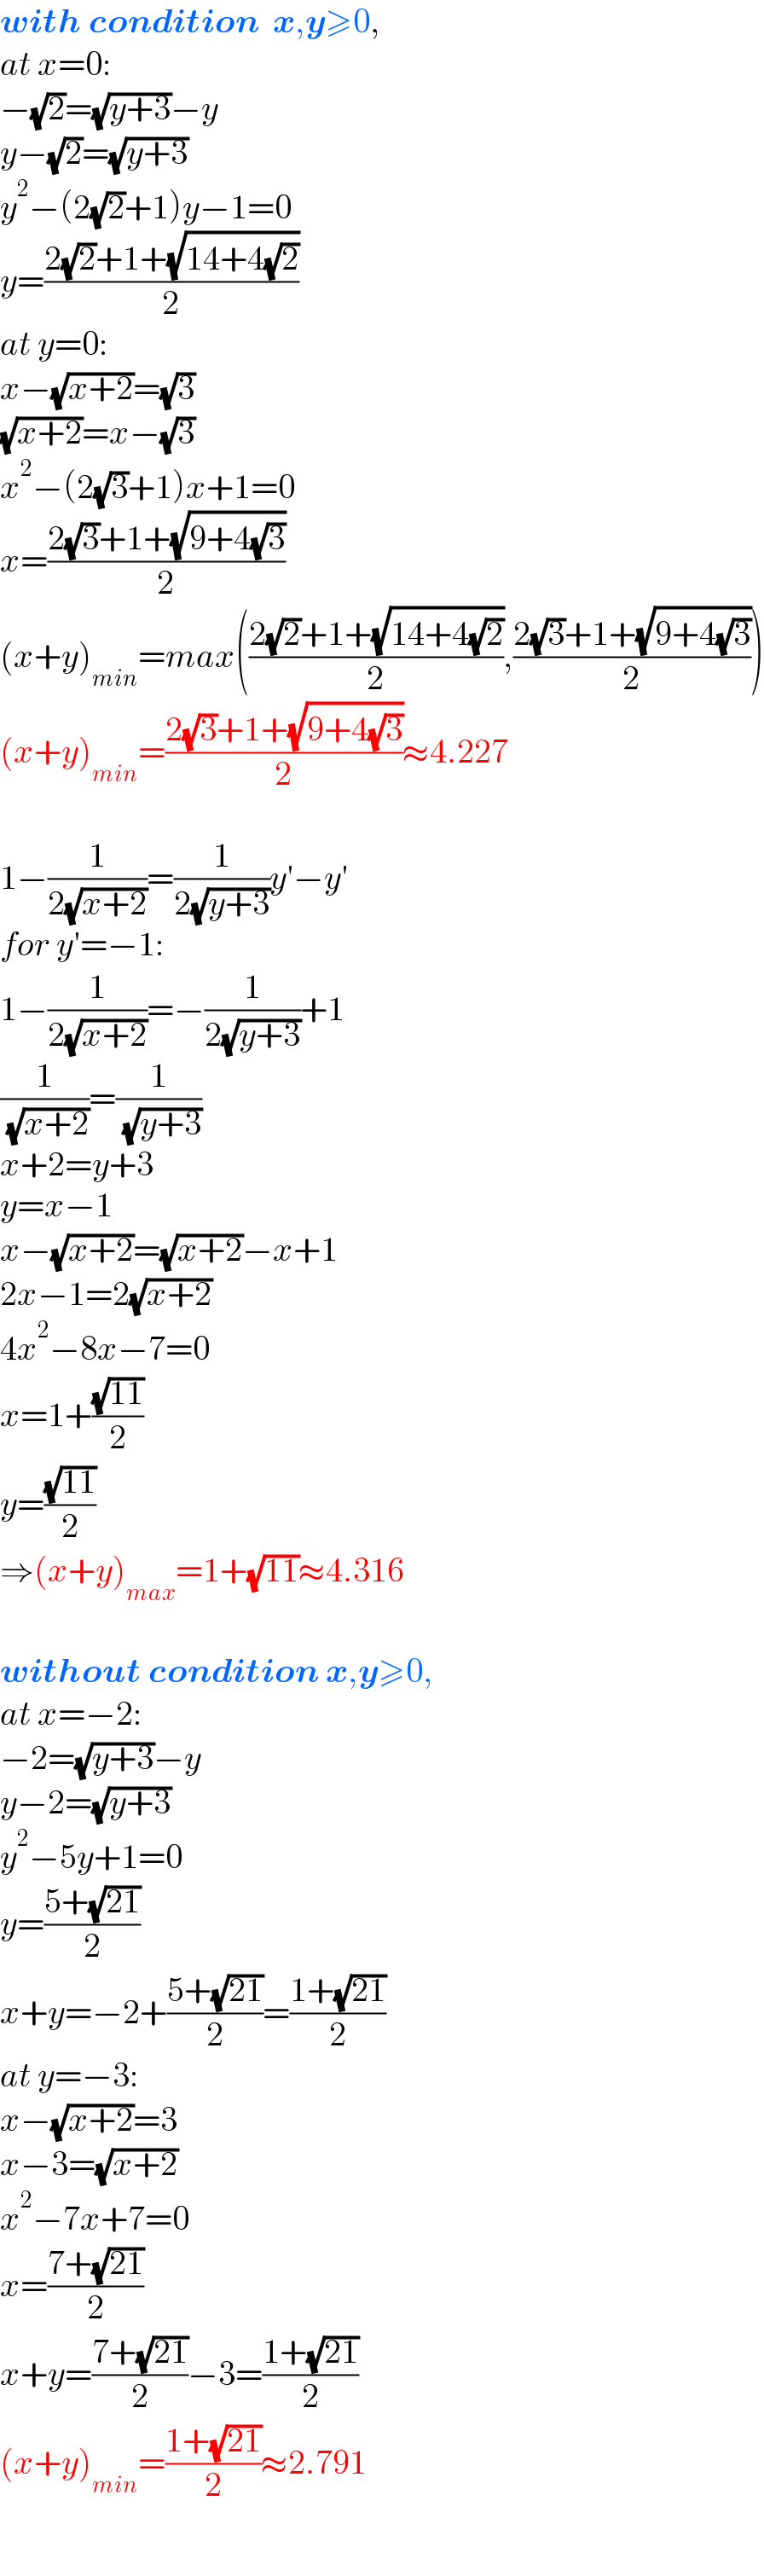 with condition  x,y≥0,   at x=0:  −(√2)=(√(y+3))−y  y−(√2)=(√(y+3))  y^2 −(2(√2)+1)y−1=0  y=((2(√2)+1+(√(14+4(√2))))/2)  at y=0:  x−(√(x+2))=(√3)  (√(x+2))=x−(√3)  x^2 −(2(√3)+1)x+1=0  x=((2(√3)+1+(√(9+4(√3))))/2)  (x+y)_(min) =max(((2(√2)+1+(√(14+4(√2))))/2),((2(√3)+1+(√(9+4(√3))))/2))  (x+y)_(min) =((2(√3)+1+(√(9+4(√3))))/2)≈4.227    1−(1/(2(√(x+2))))=(1/(2(√(y+3))))y′−y′  for y′=−1:  1−(1/(2(√(x+2))))=−(1/(2(√(y+3))))+1  (1/( (√(x+2))))=(1/( (√(y+3))))  x+2=y+3  y=x−1  x−(√(x+2))=(√(x+2))−x+1  2x−1=2(√(x+2))  4x^2 −8x−7=0  x=1+((√(11))/2)  y=((√(11))/2)  ⇒(x+y)_(max) =1+(√(11))≈4.316    without condition x,y≥0,  at x=−2:  −2=(√(y+3))−y  y−2=(√(y+3))  y^2 −5y+1=0  y=((5+(√(21)))/2)  x+y=−2+((5+(√(21)))/2)=((1+(√(21)))/2)  at y=−3:  x−(√(x+2))=3  x−3=(√(x+2))  x^2 −7x+7=0  x=((7+(√(21)))/2)  x+y=((7+(√(21)))/2)−3=((1+(√(21)))/2)  (x+y)_(min) =((1+(√(21)))/2)≈2.791  